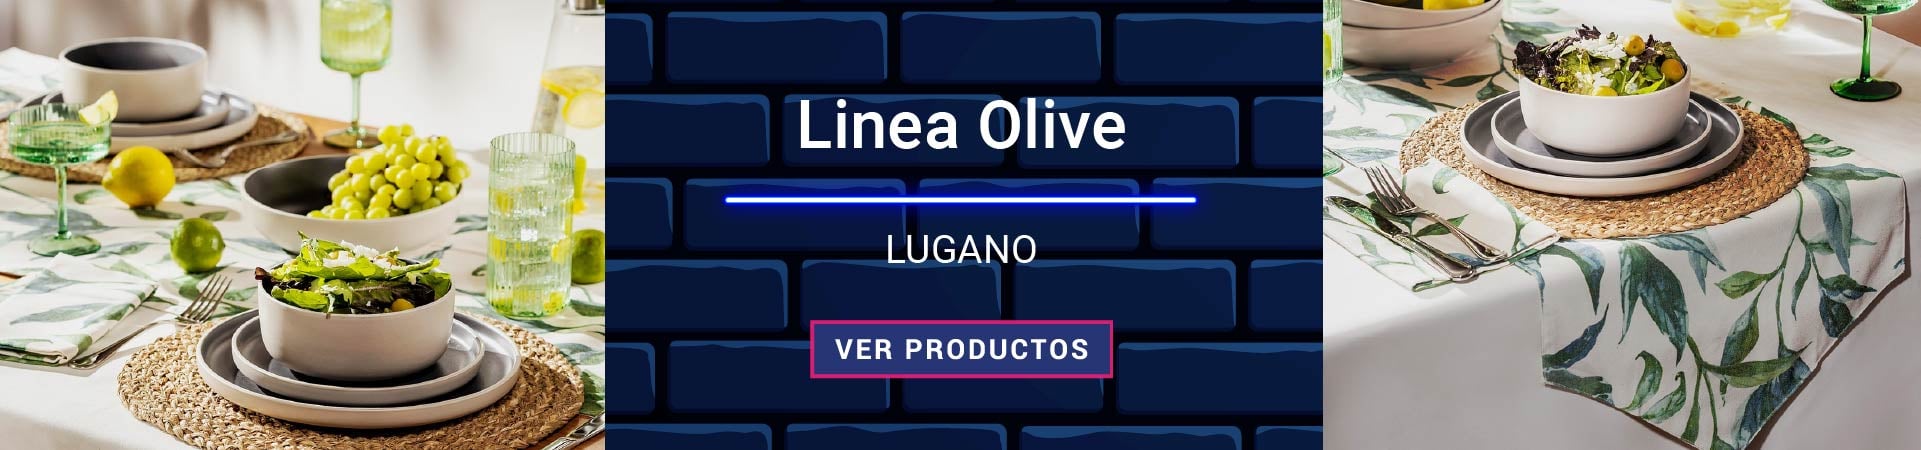 Linea Olive